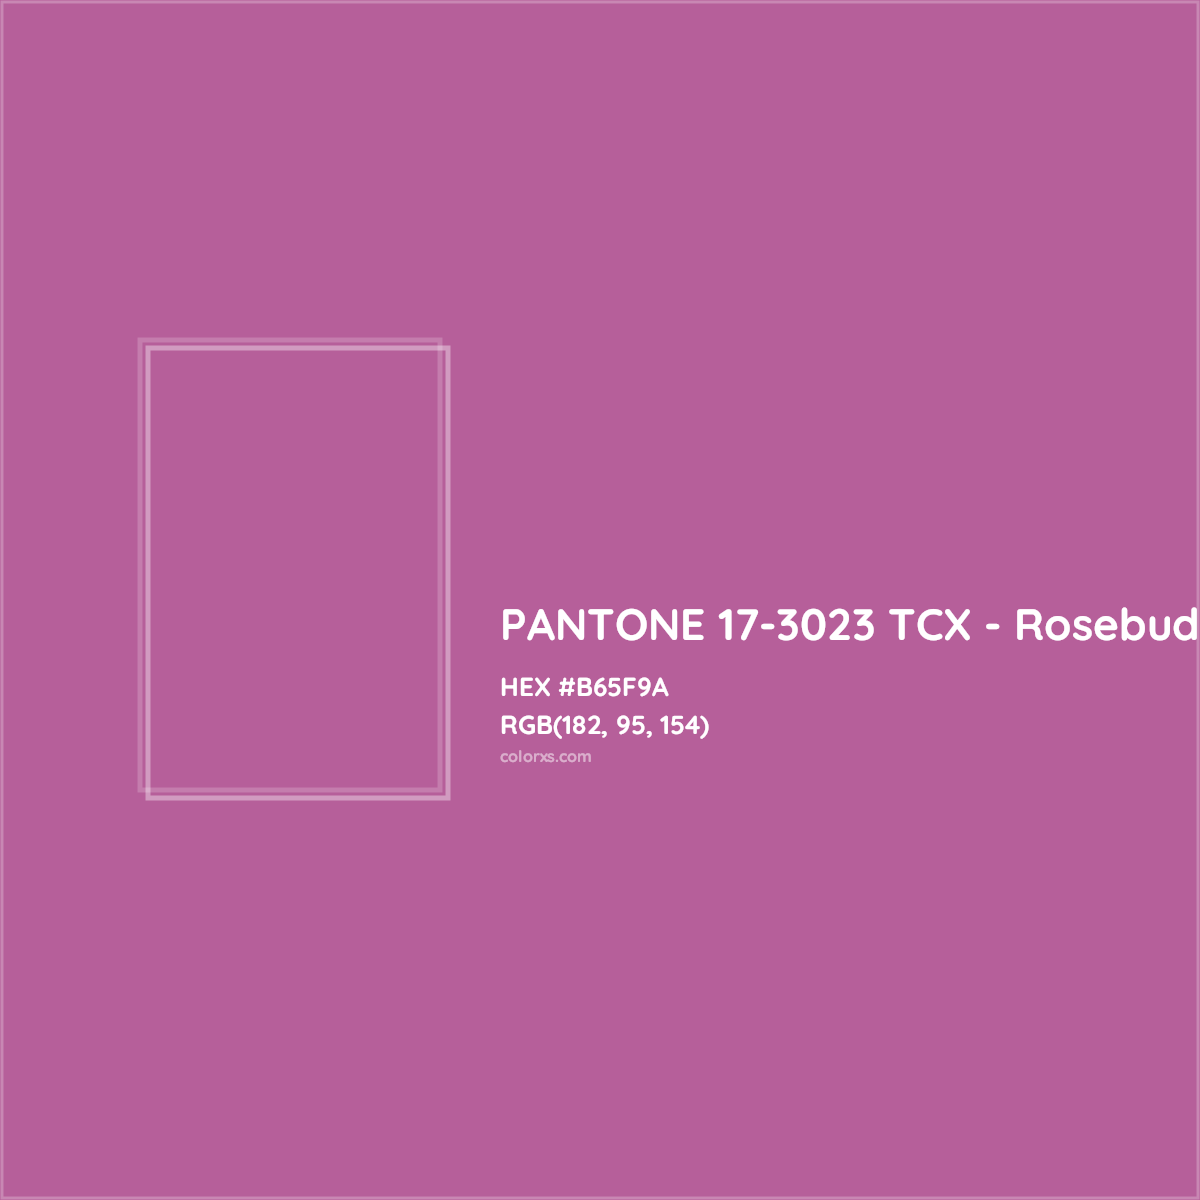 HEX #B65F9A PANTONE 17-3023 TCX - Rosebud CMS Pantone TCX - Color Code